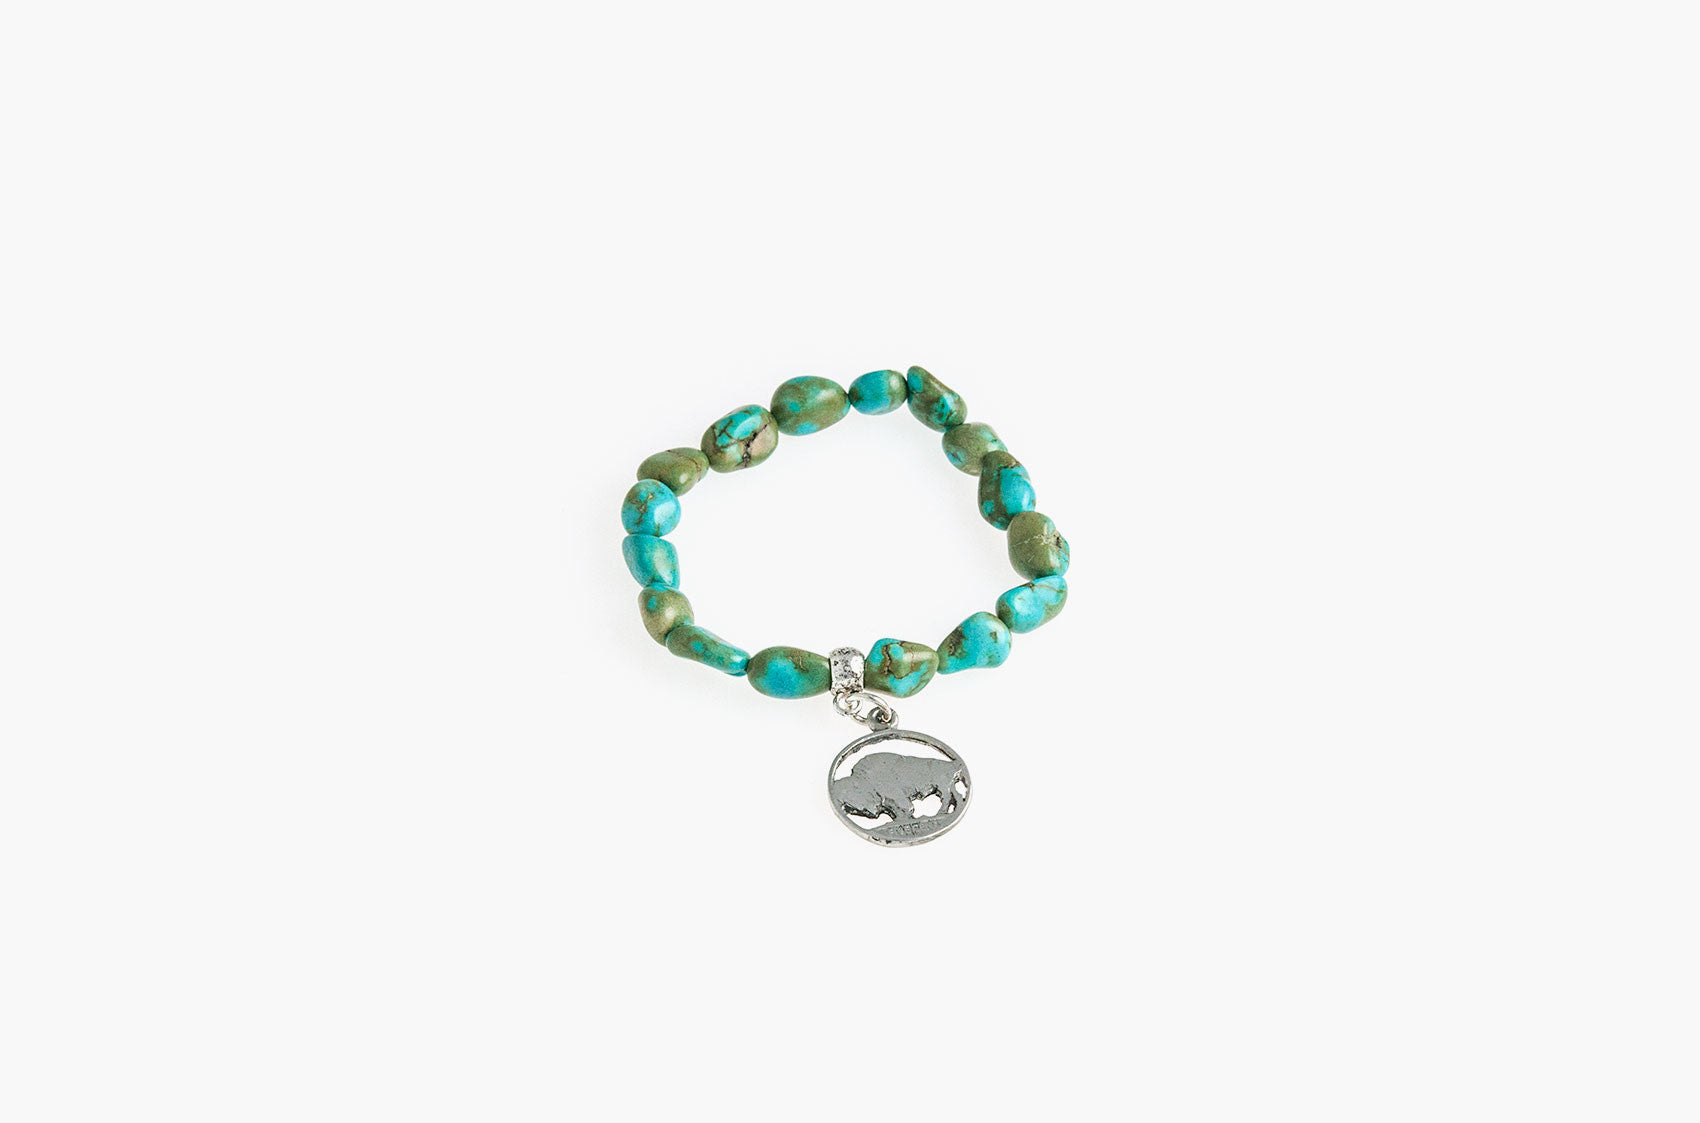 Turquoise nuggets with buffalo charm bracelet